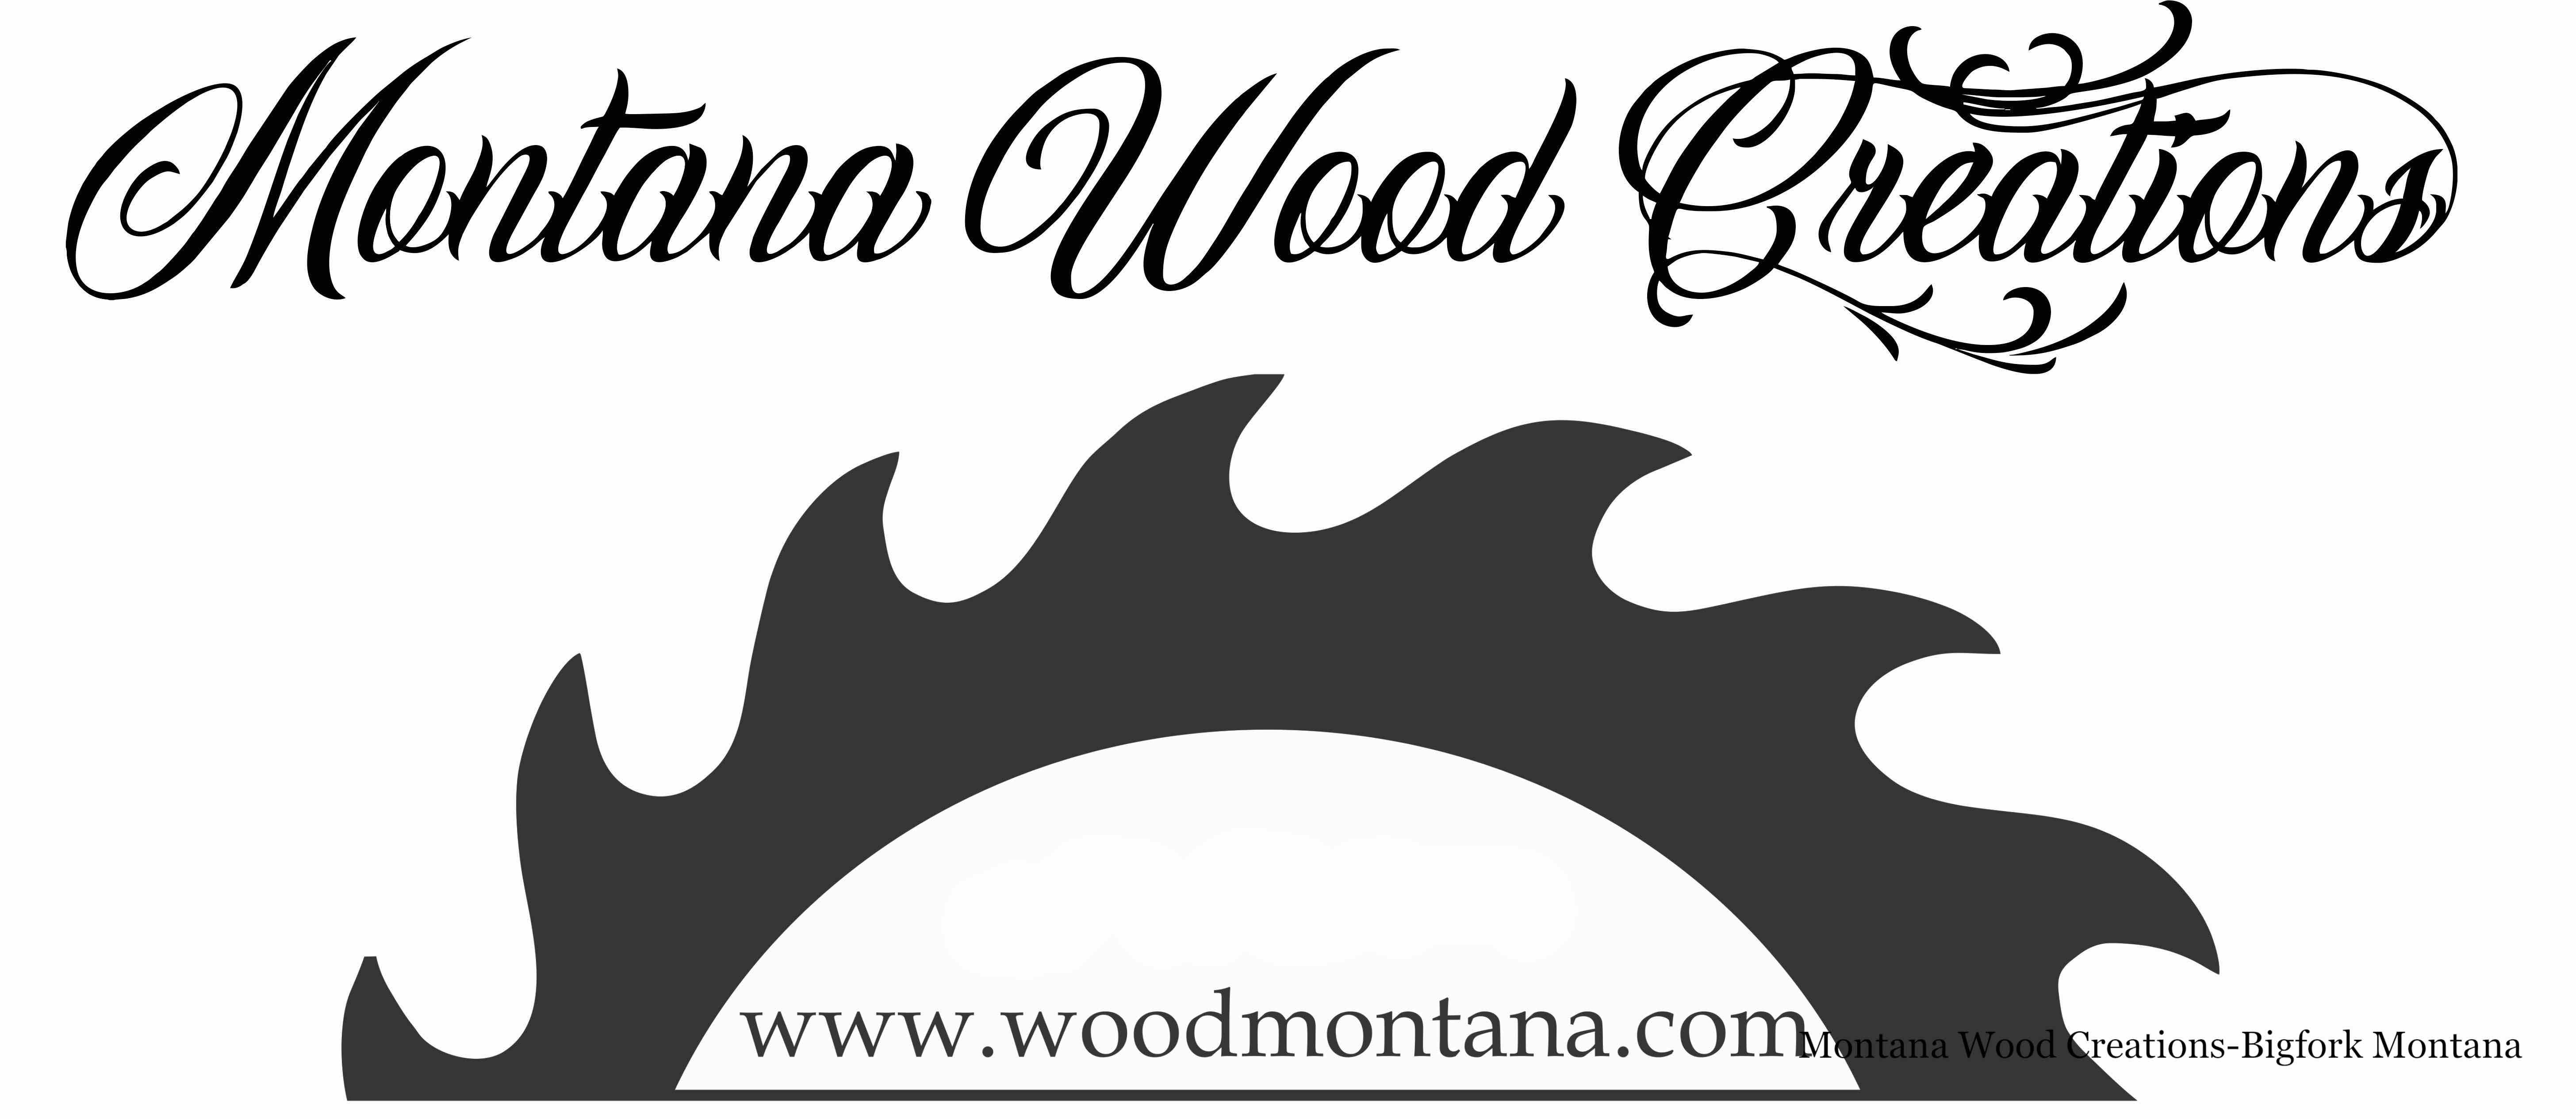 Montana Wood Locations - Bigfork Montana